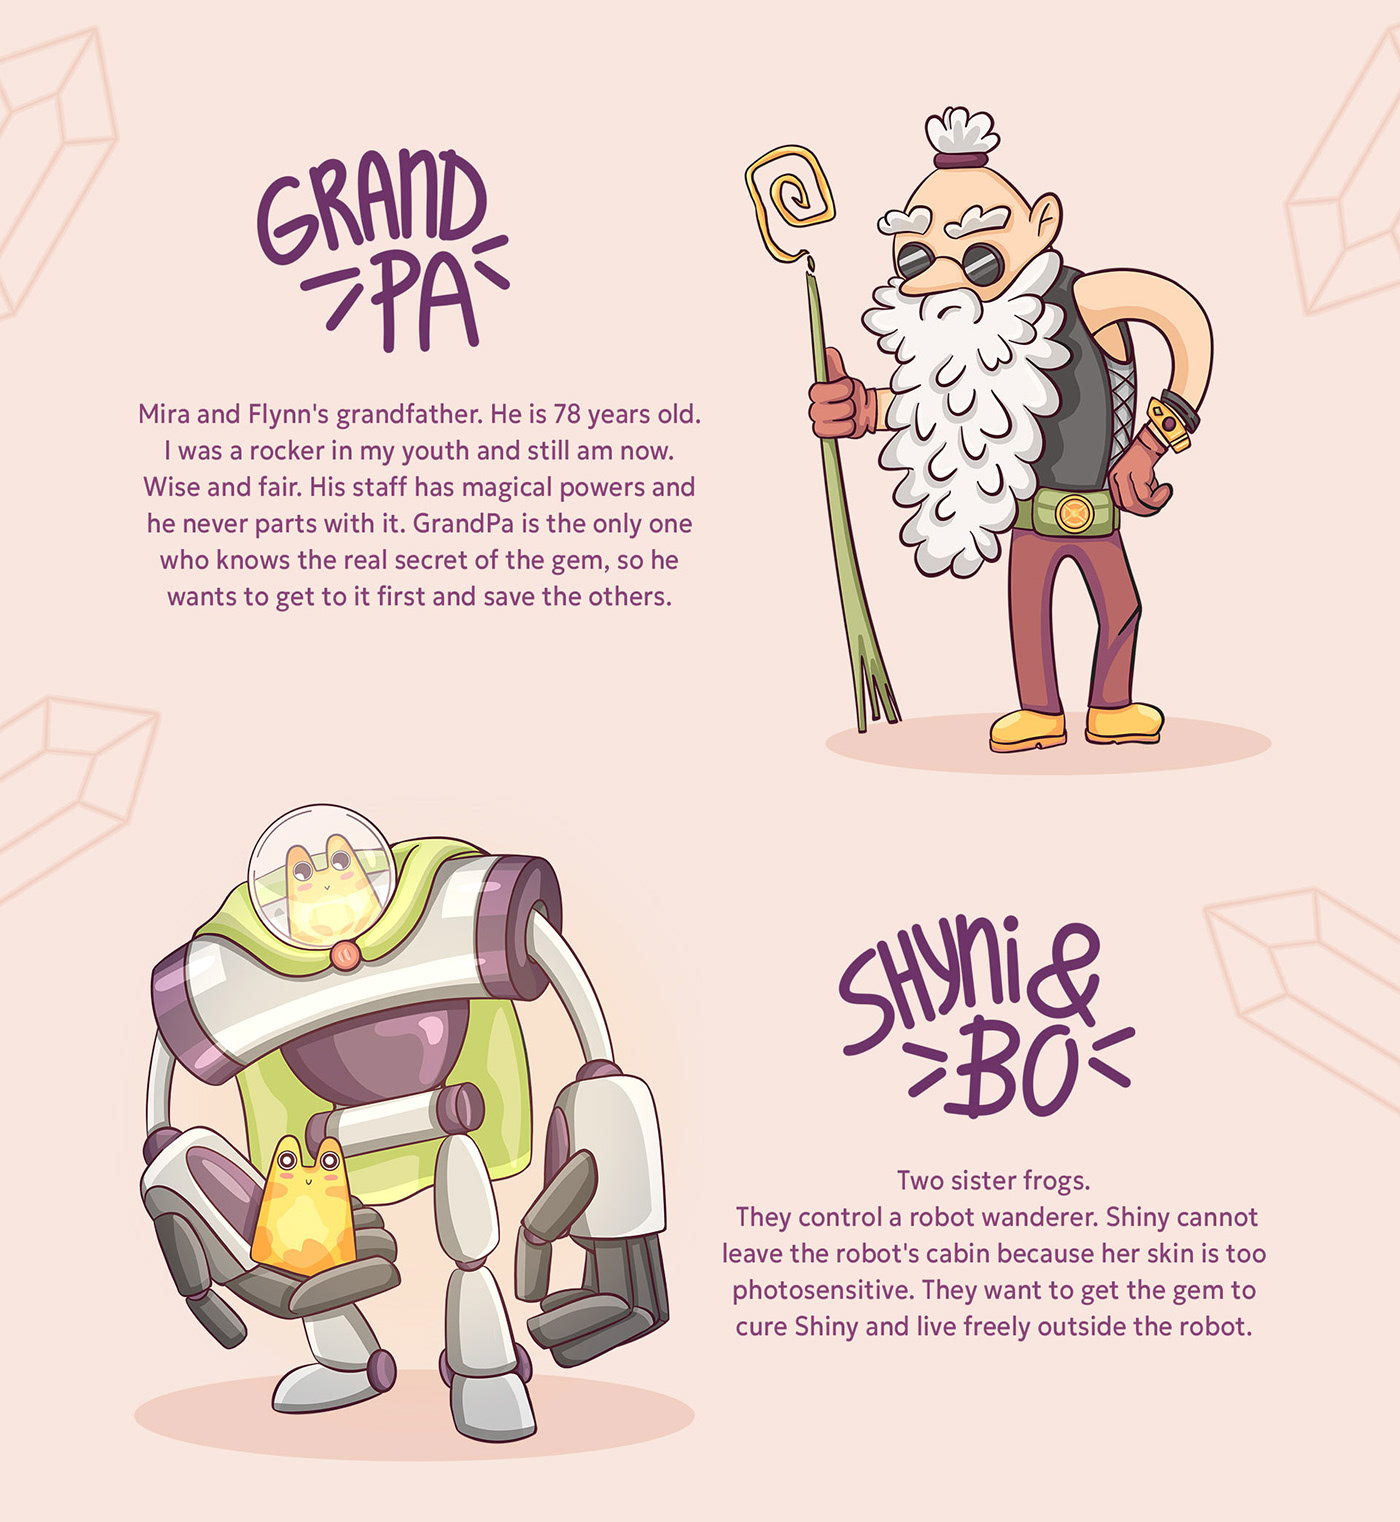 Cartoon character design. Old man rock music lover. Frogs mecha manage robot. cartoon illustration